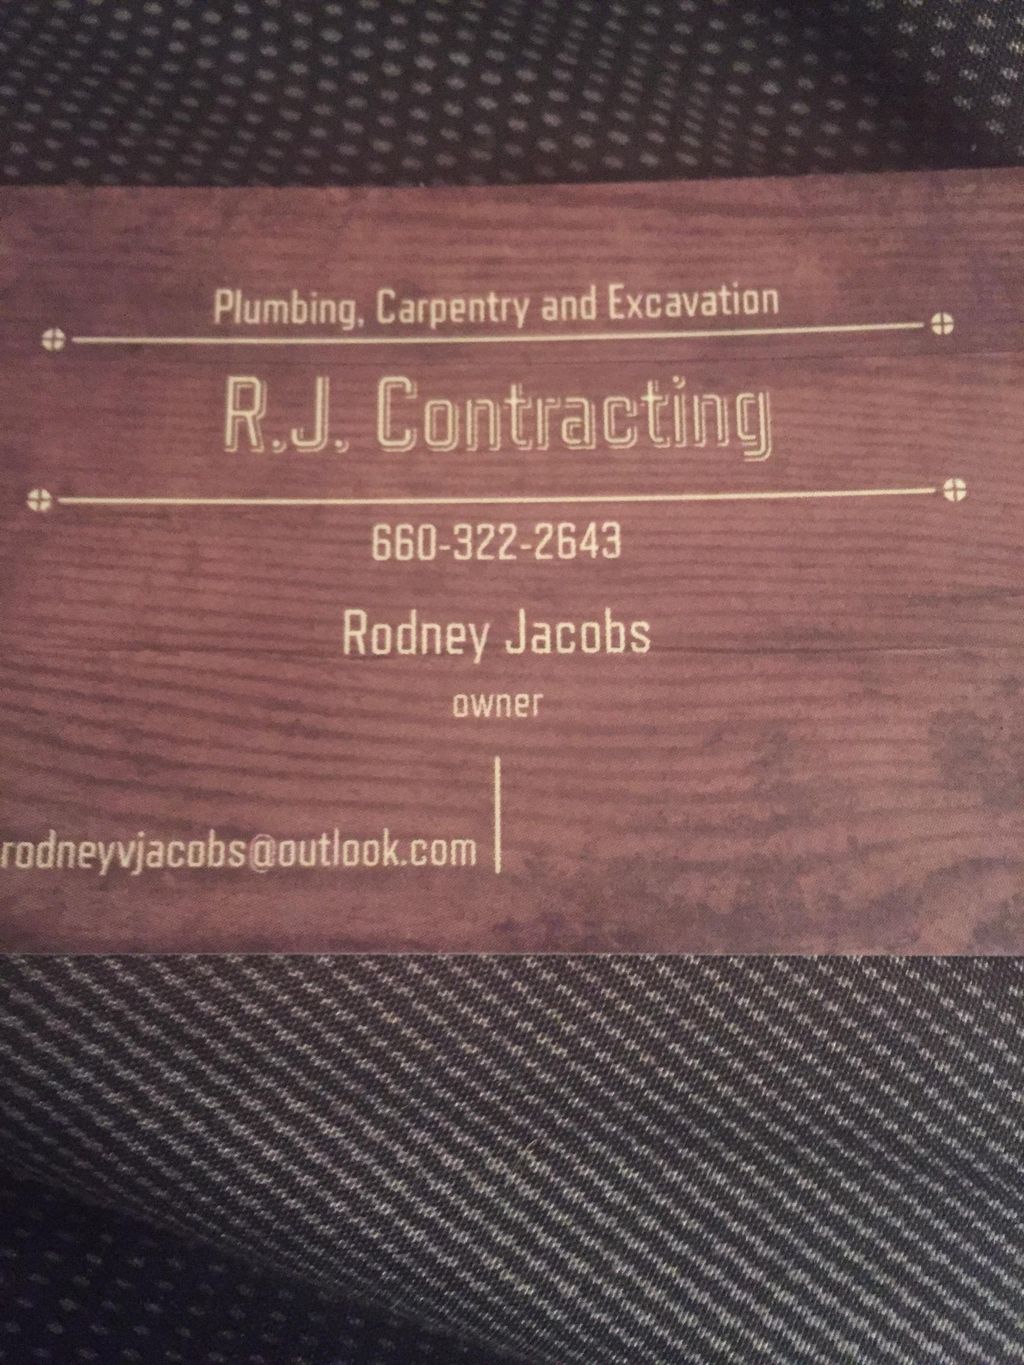 Rj contracting